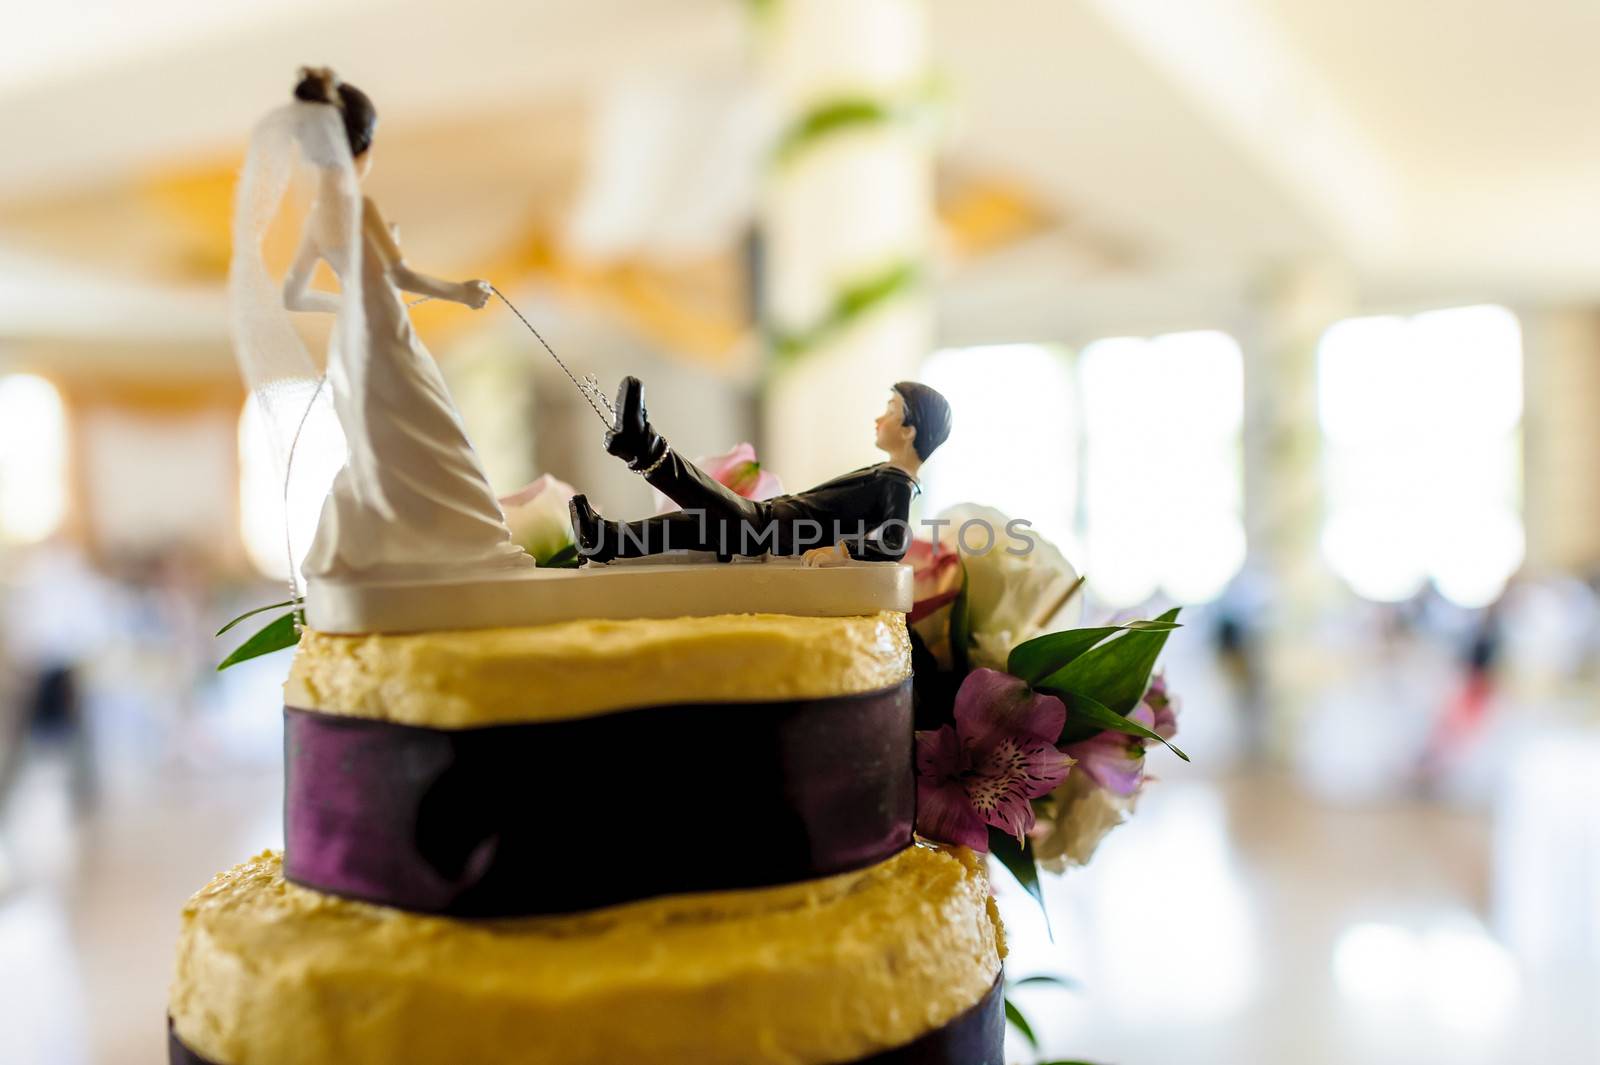 Funny wedding cake docoration, tied groom on bride's leash. by westernstudio